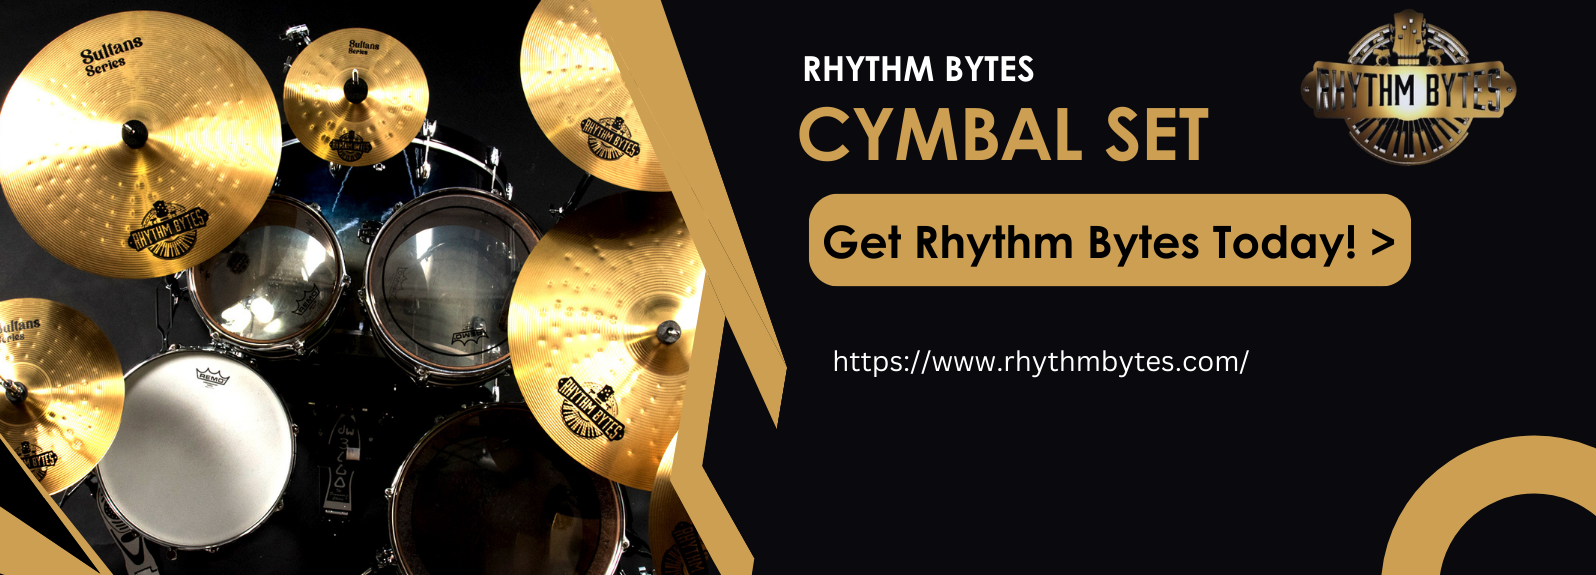 Rhythm Bytes Musical Instrument Brand